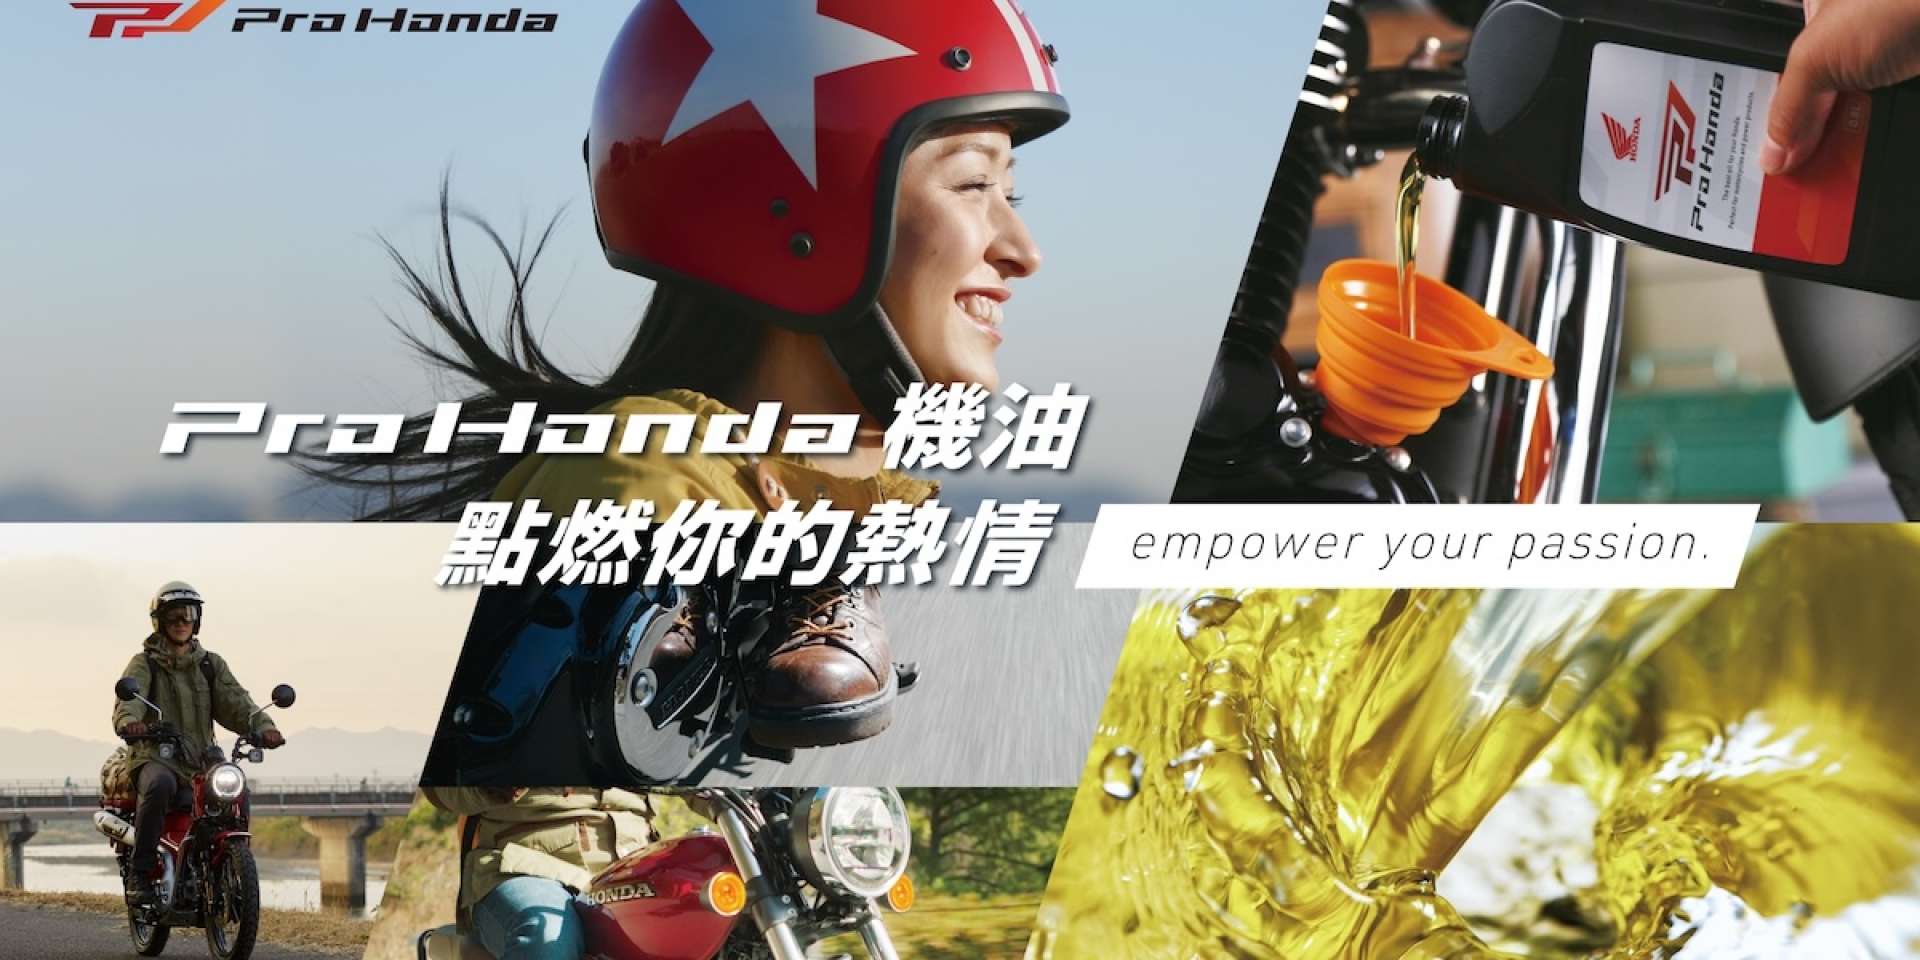 Honda Taiwan 推出全新高品質機油「Pro Honda」 Empower your passion 點燃你的熱情